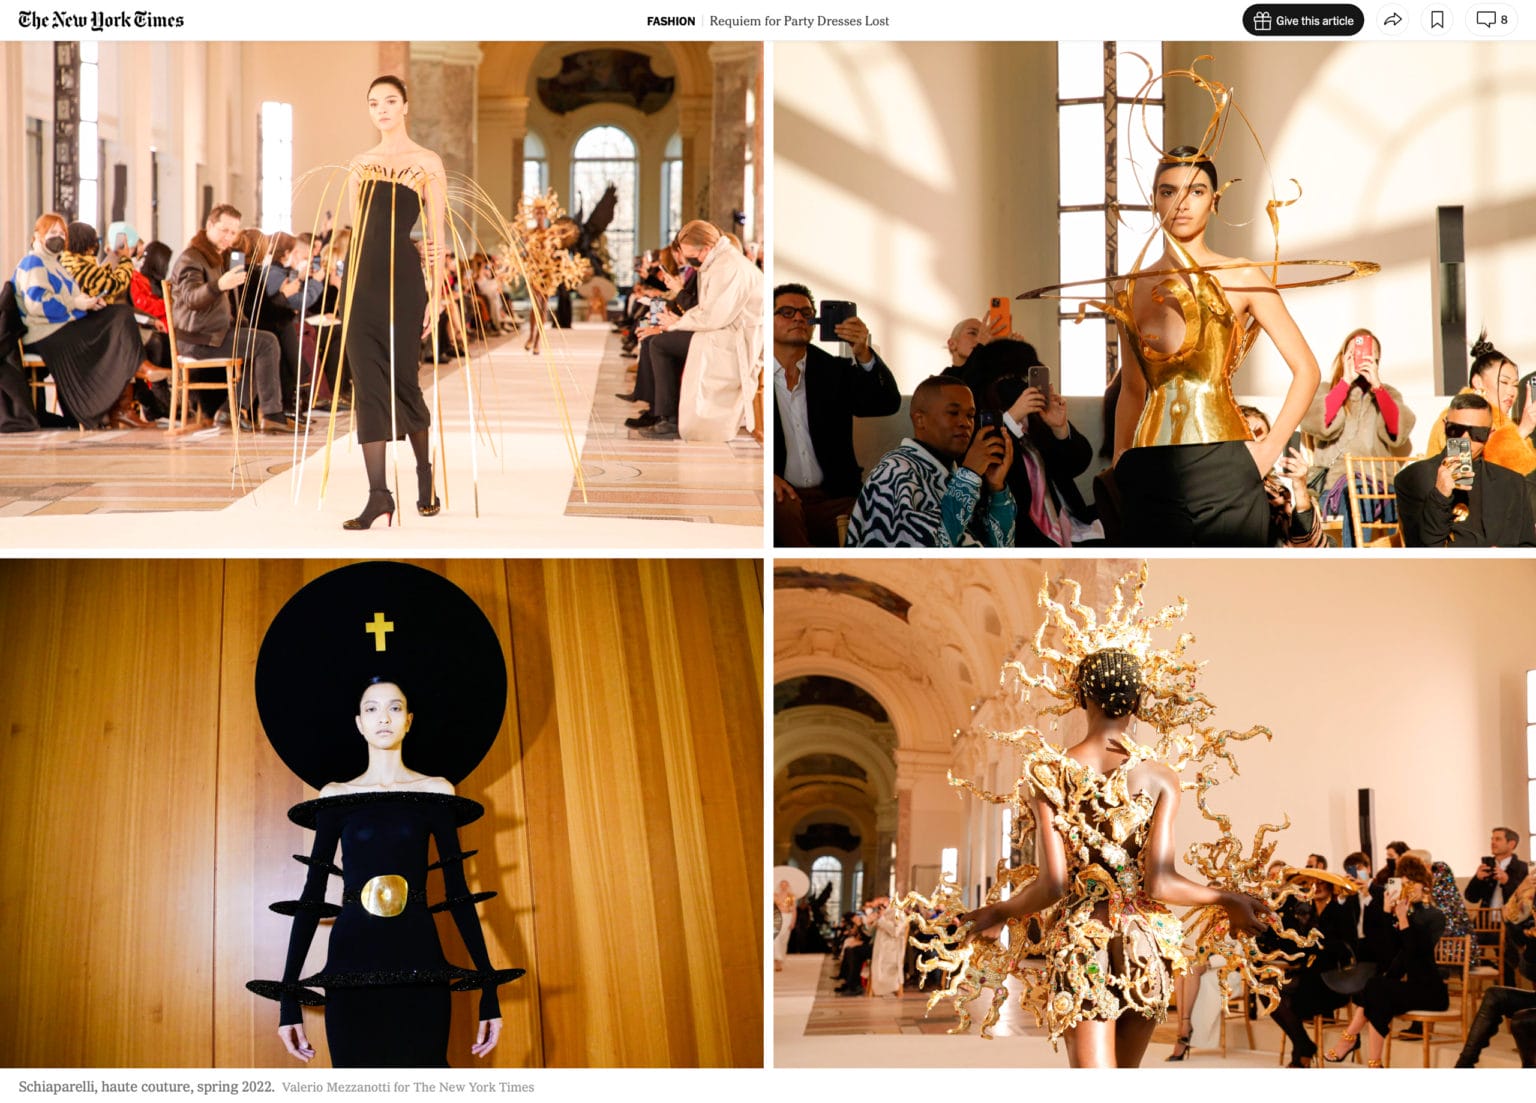 Schiaparelli Fashion Show, Photo by Valerio Mezzanotti for The New York Times